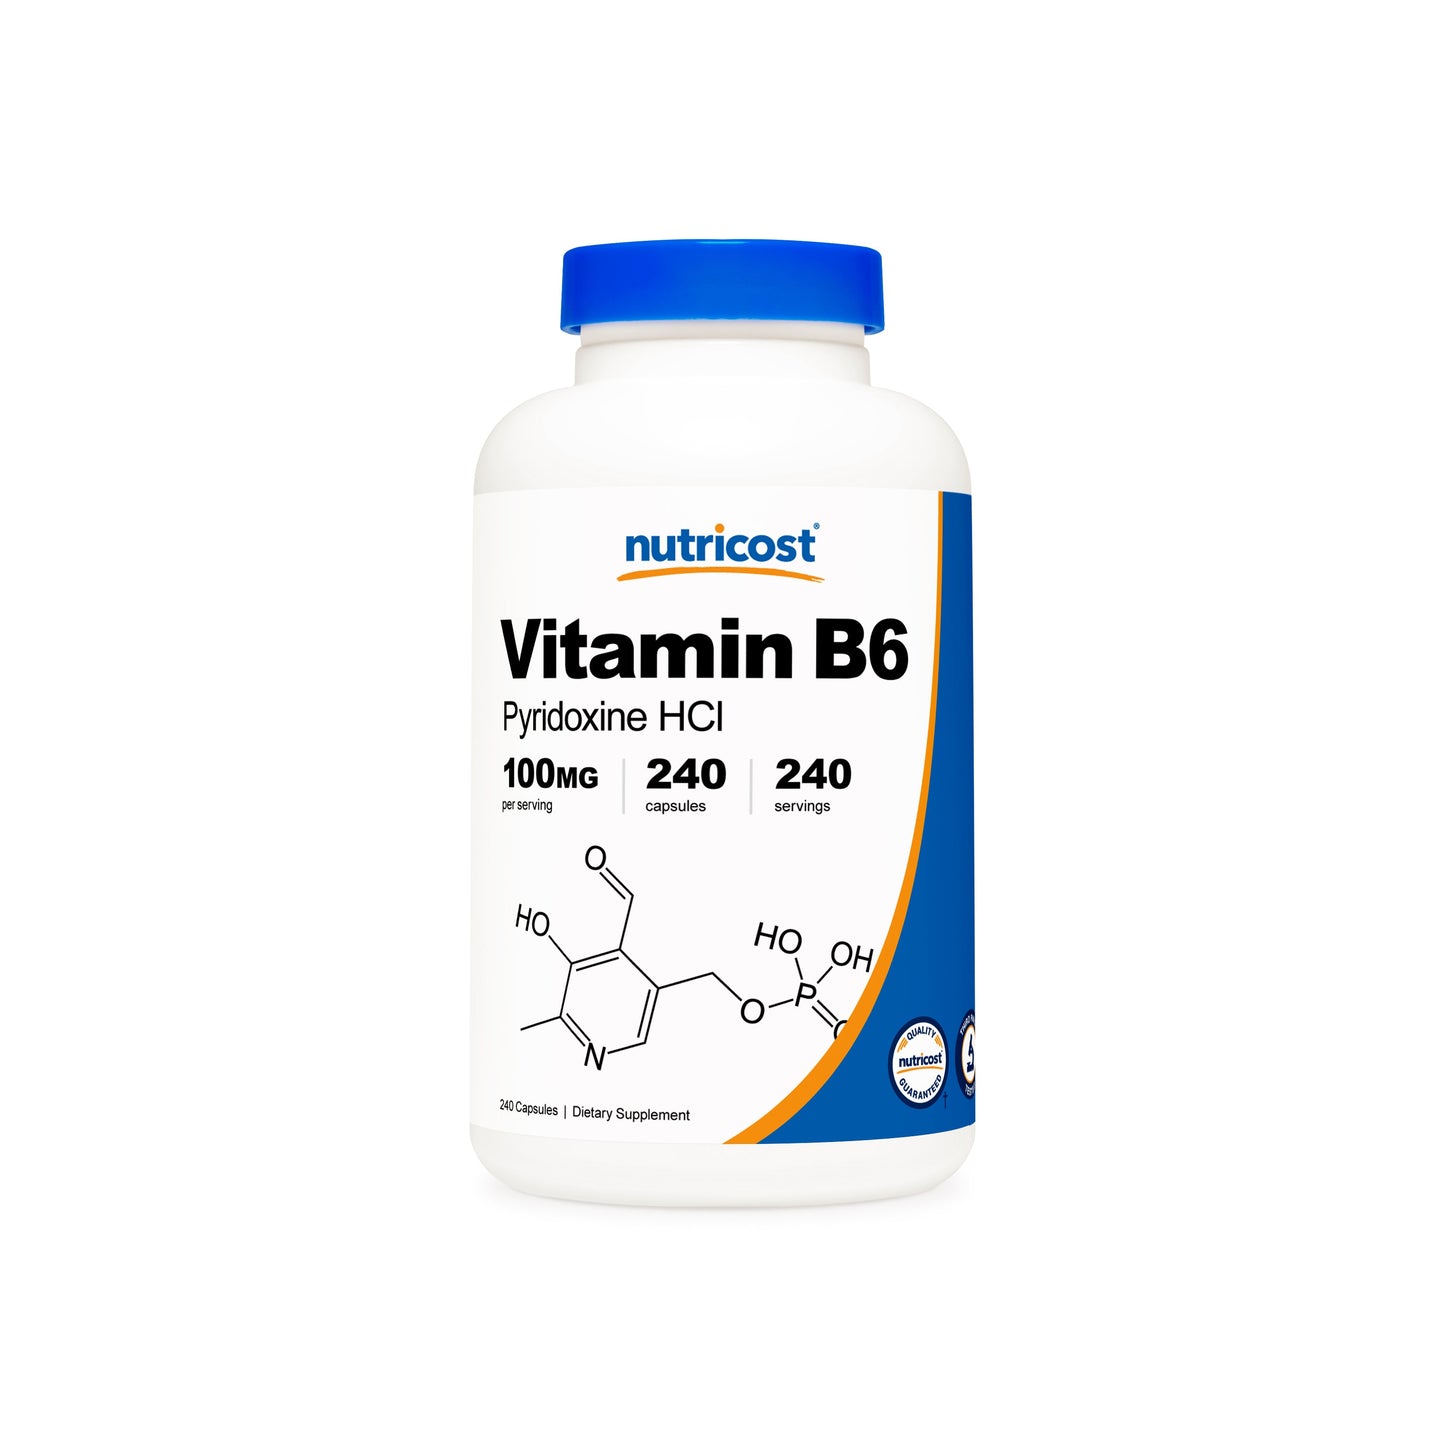 Nutricost Vitamin B6 (Pyridoxine HCI) Capsules